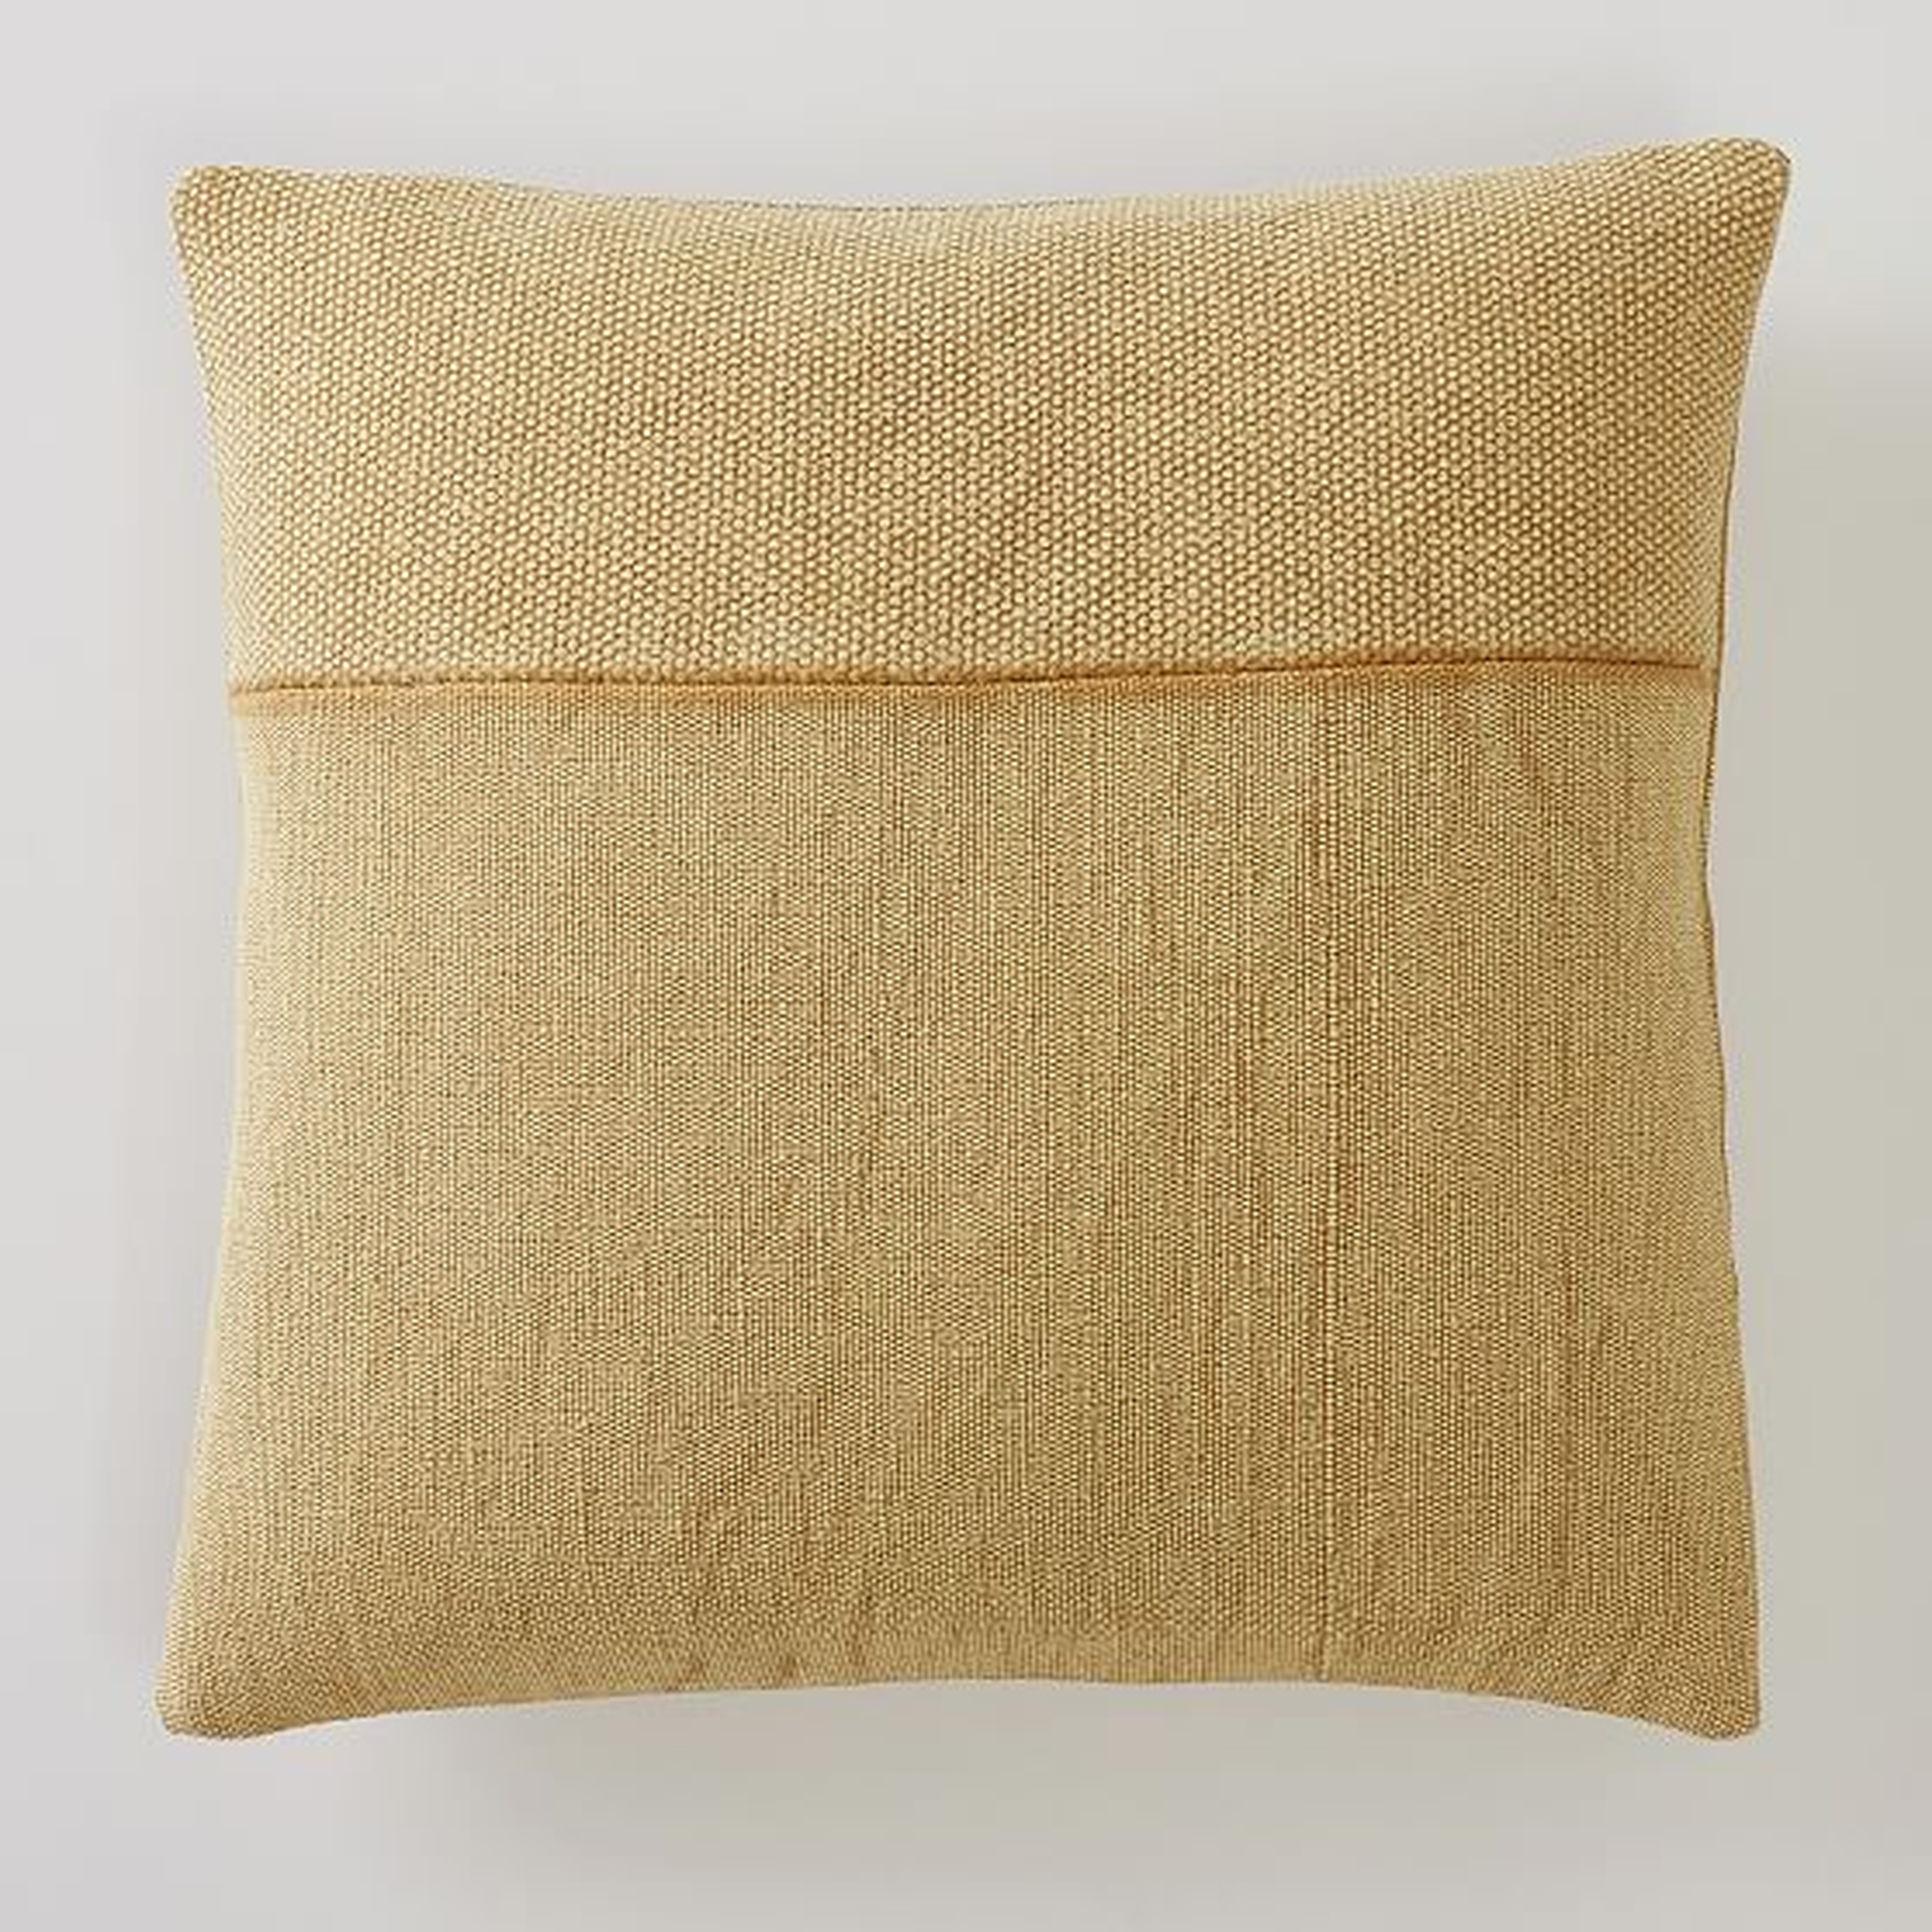 Cotton Canvas Pillow Cover, 18X18, Horseradish - West Elm